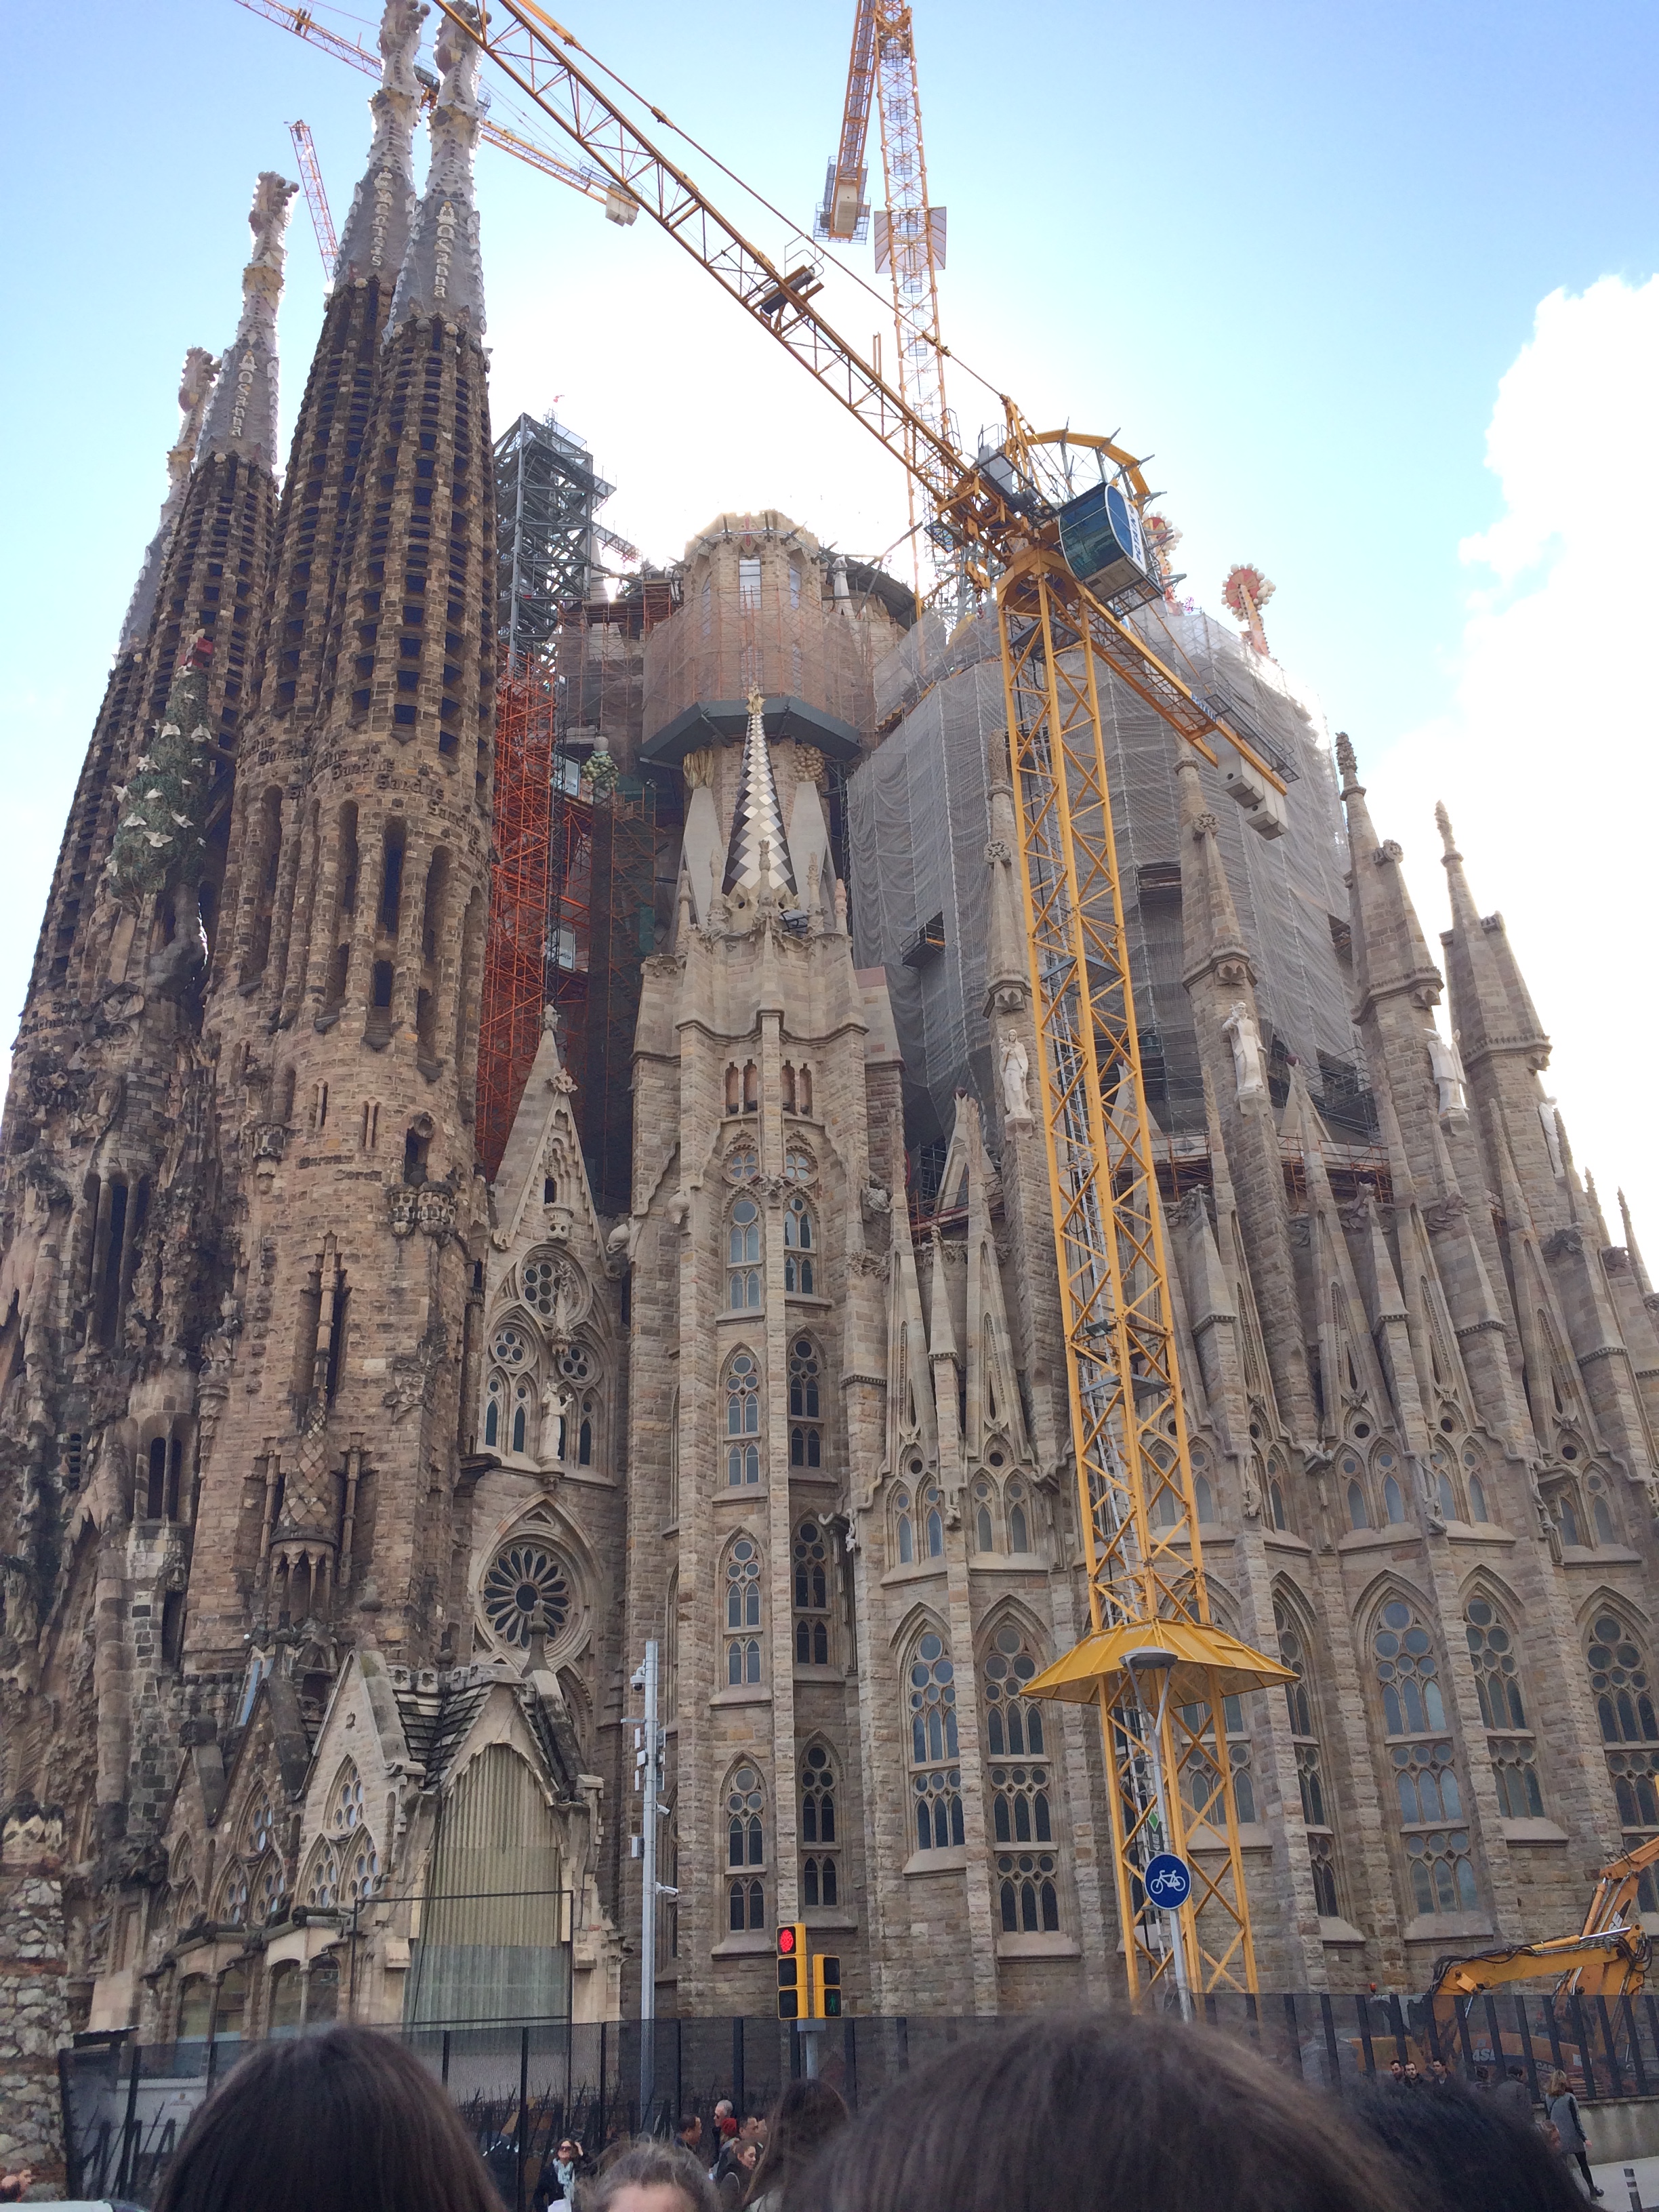 Image of the Sagrada Familia in Barcelona